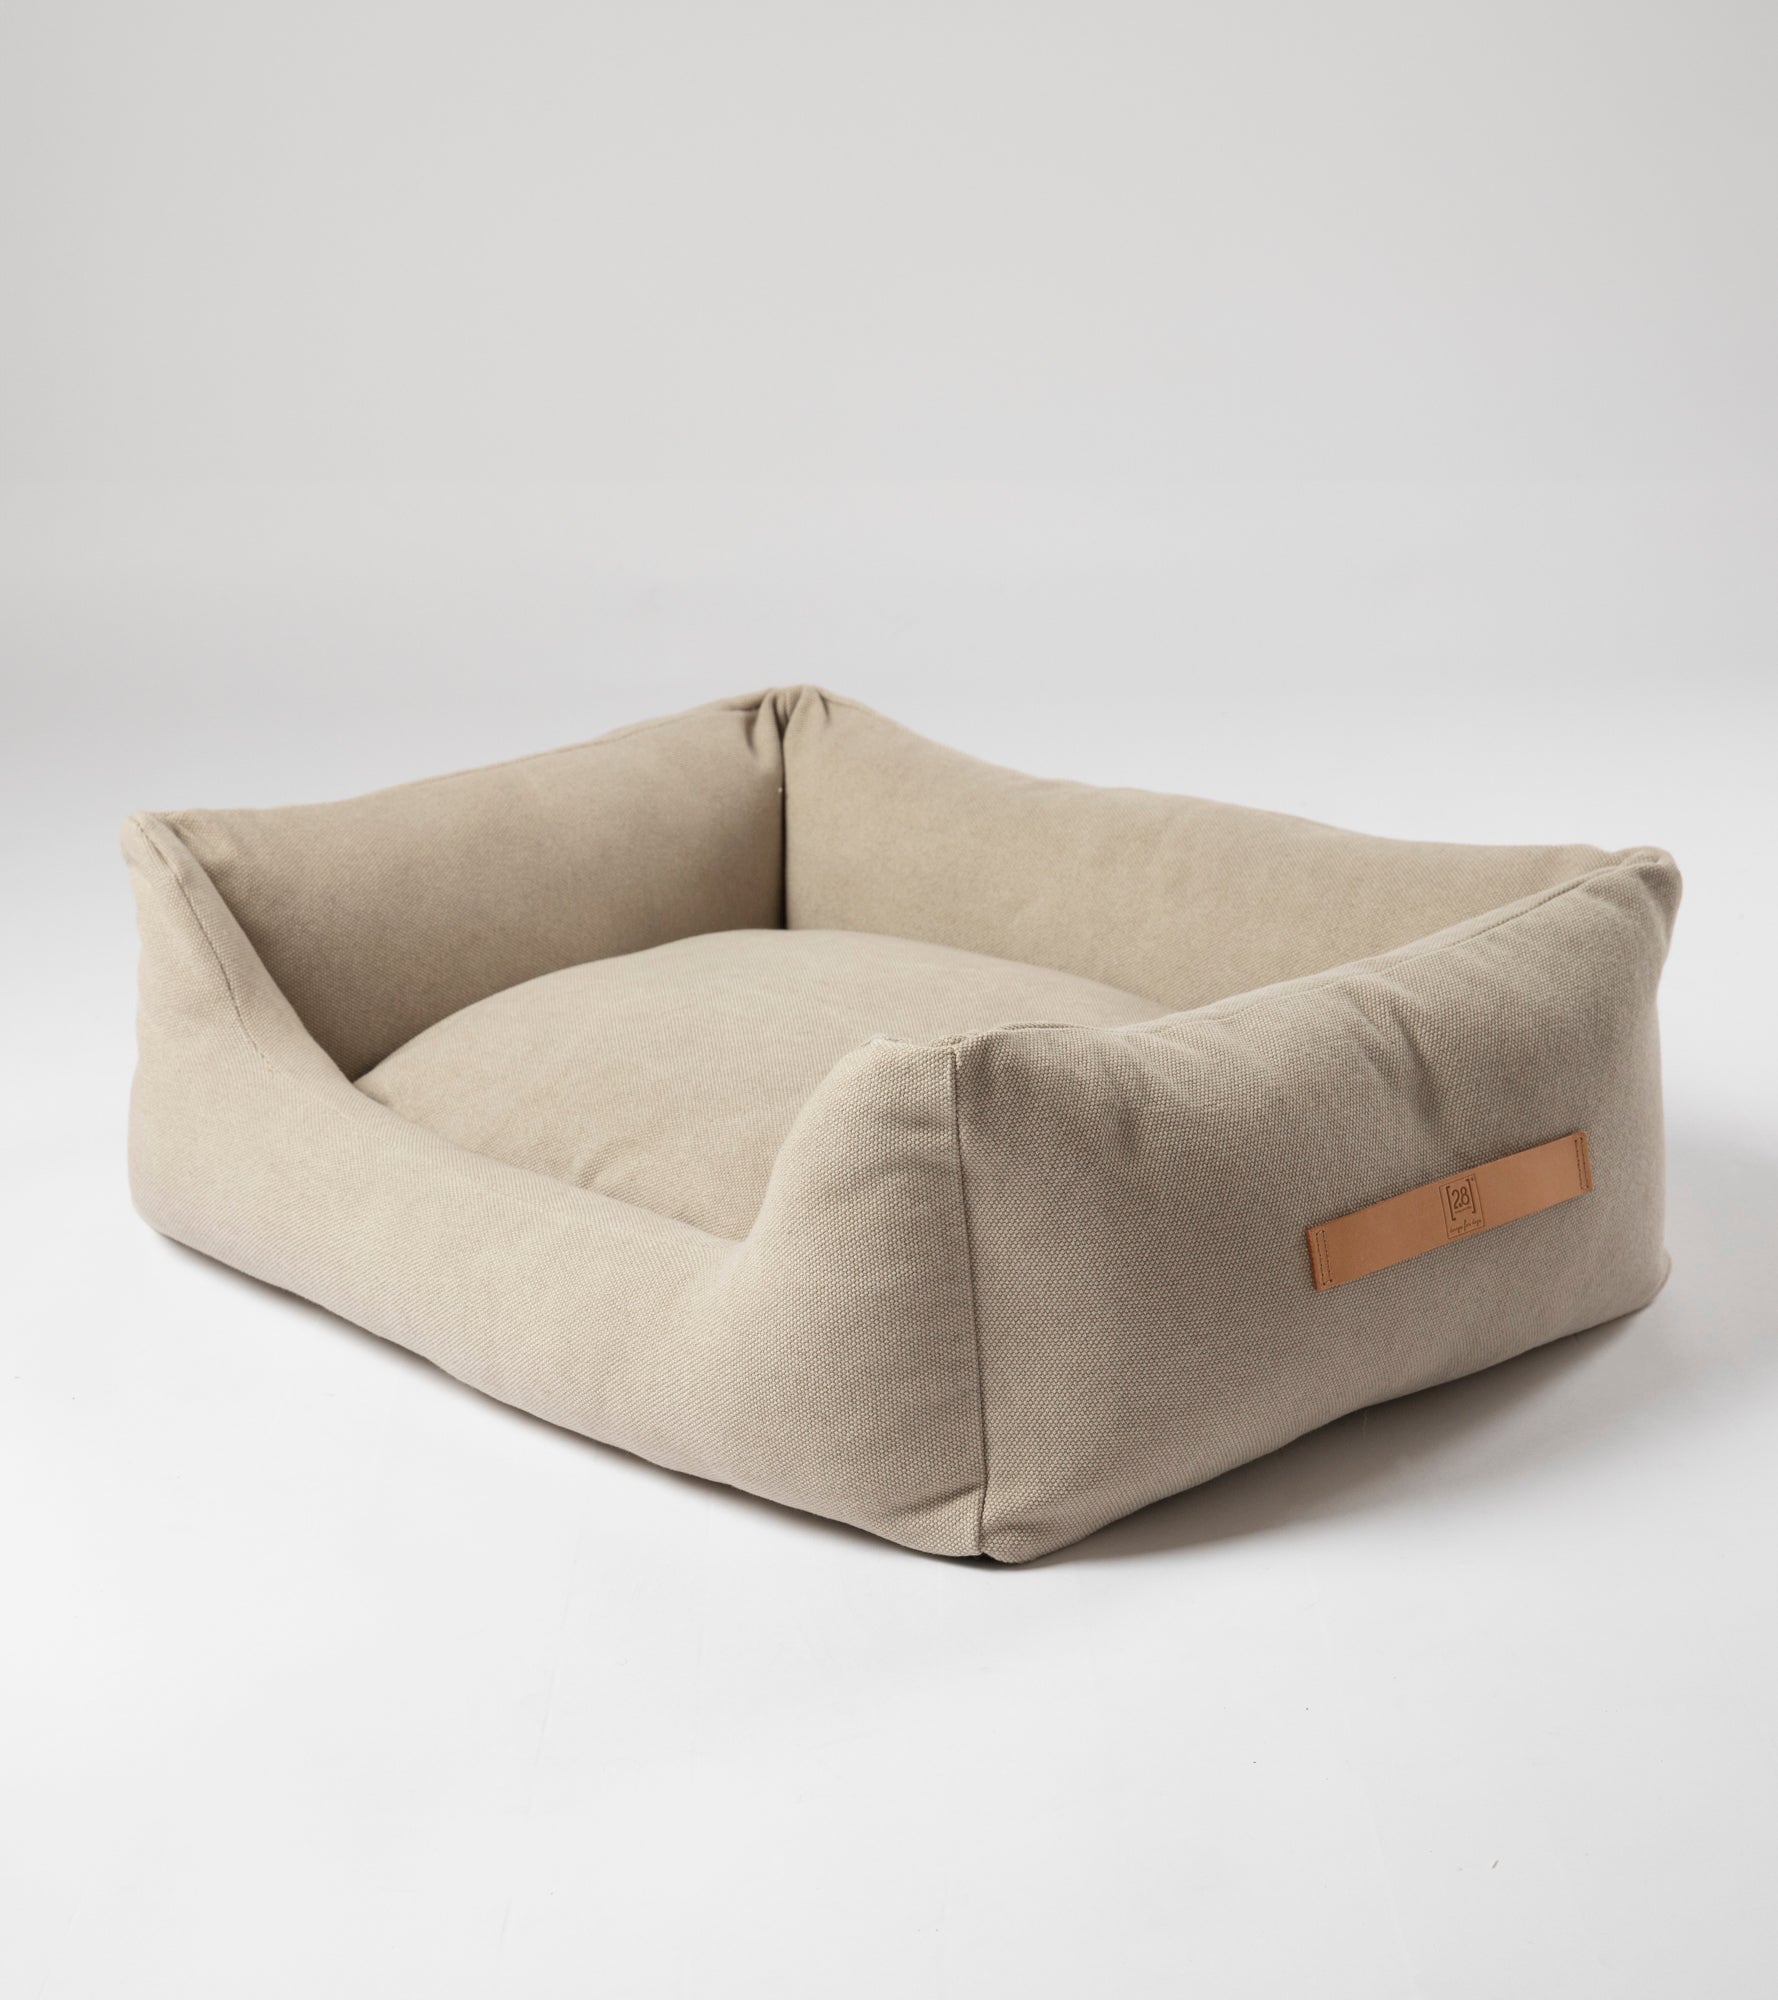 organic-cotton-dog-bed-luxury_e240662f-d73c-4605-945d-1aaa0b9e3177.jpg